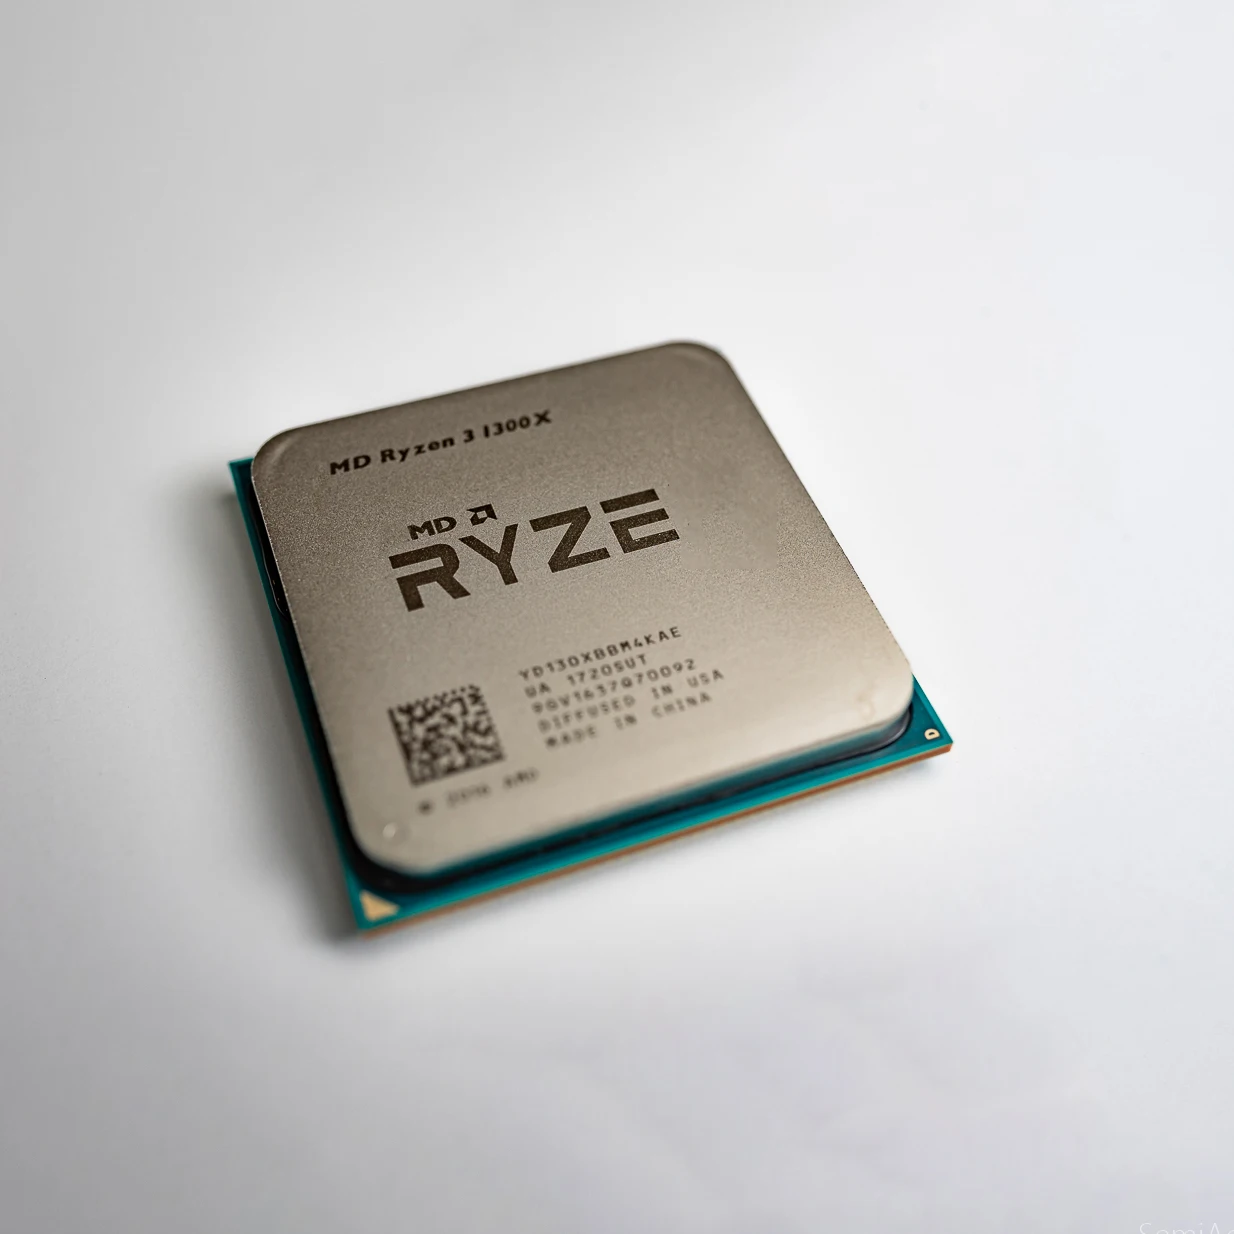 Amd x6 купить. Процессор АМД райзен 3. AMD Ryzen 3 Pro 1300 Quad-Core Processor 3.50 GHZ. Процессор Ryzen 3 1300x. Райзен 5 1600.